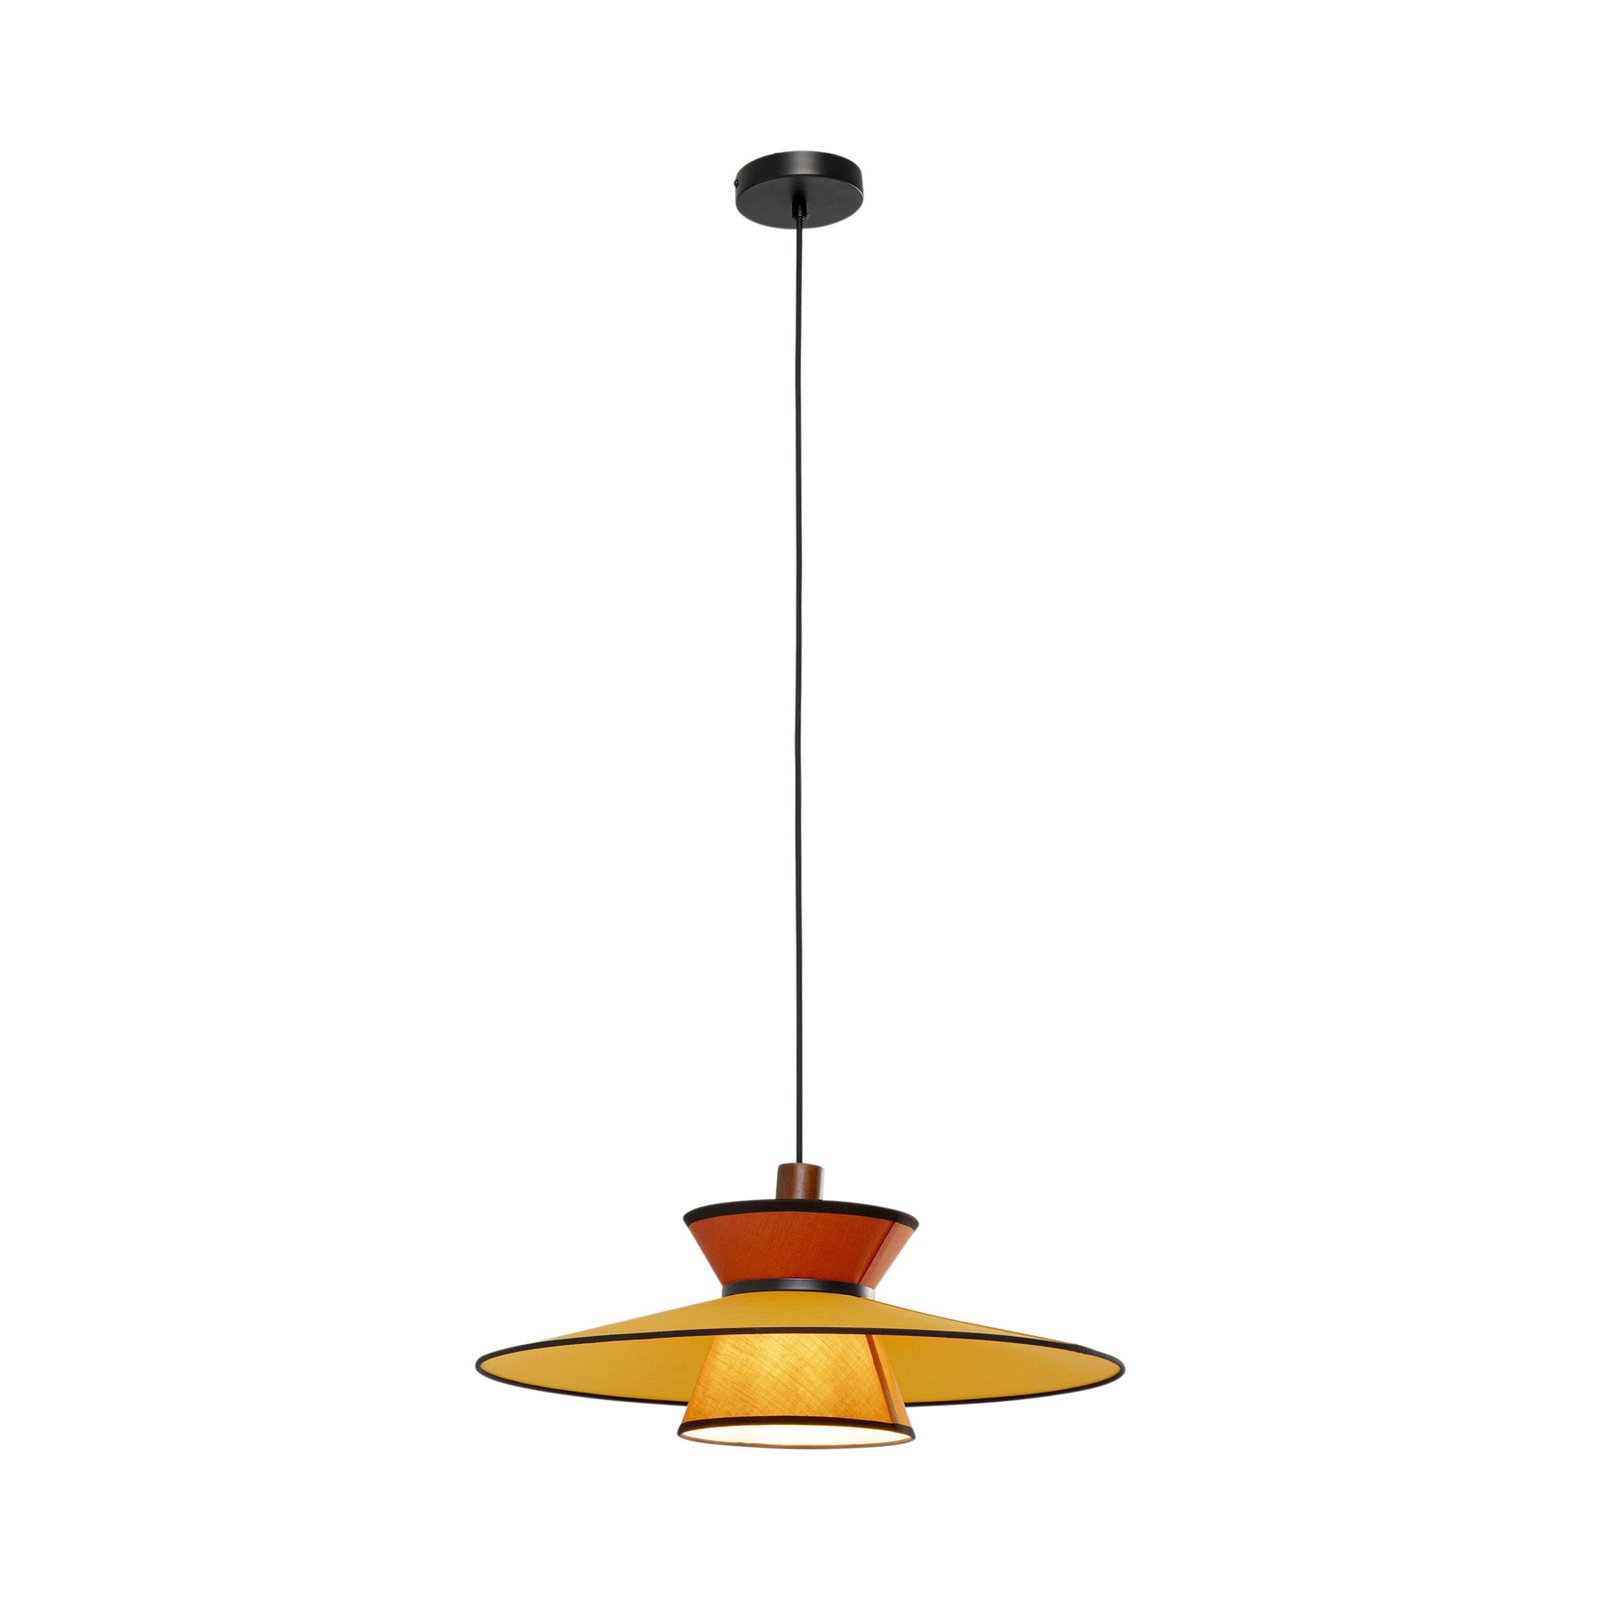 Kare lámpara colgante Riva, multicolor, textil, madera, Ø 55 cm